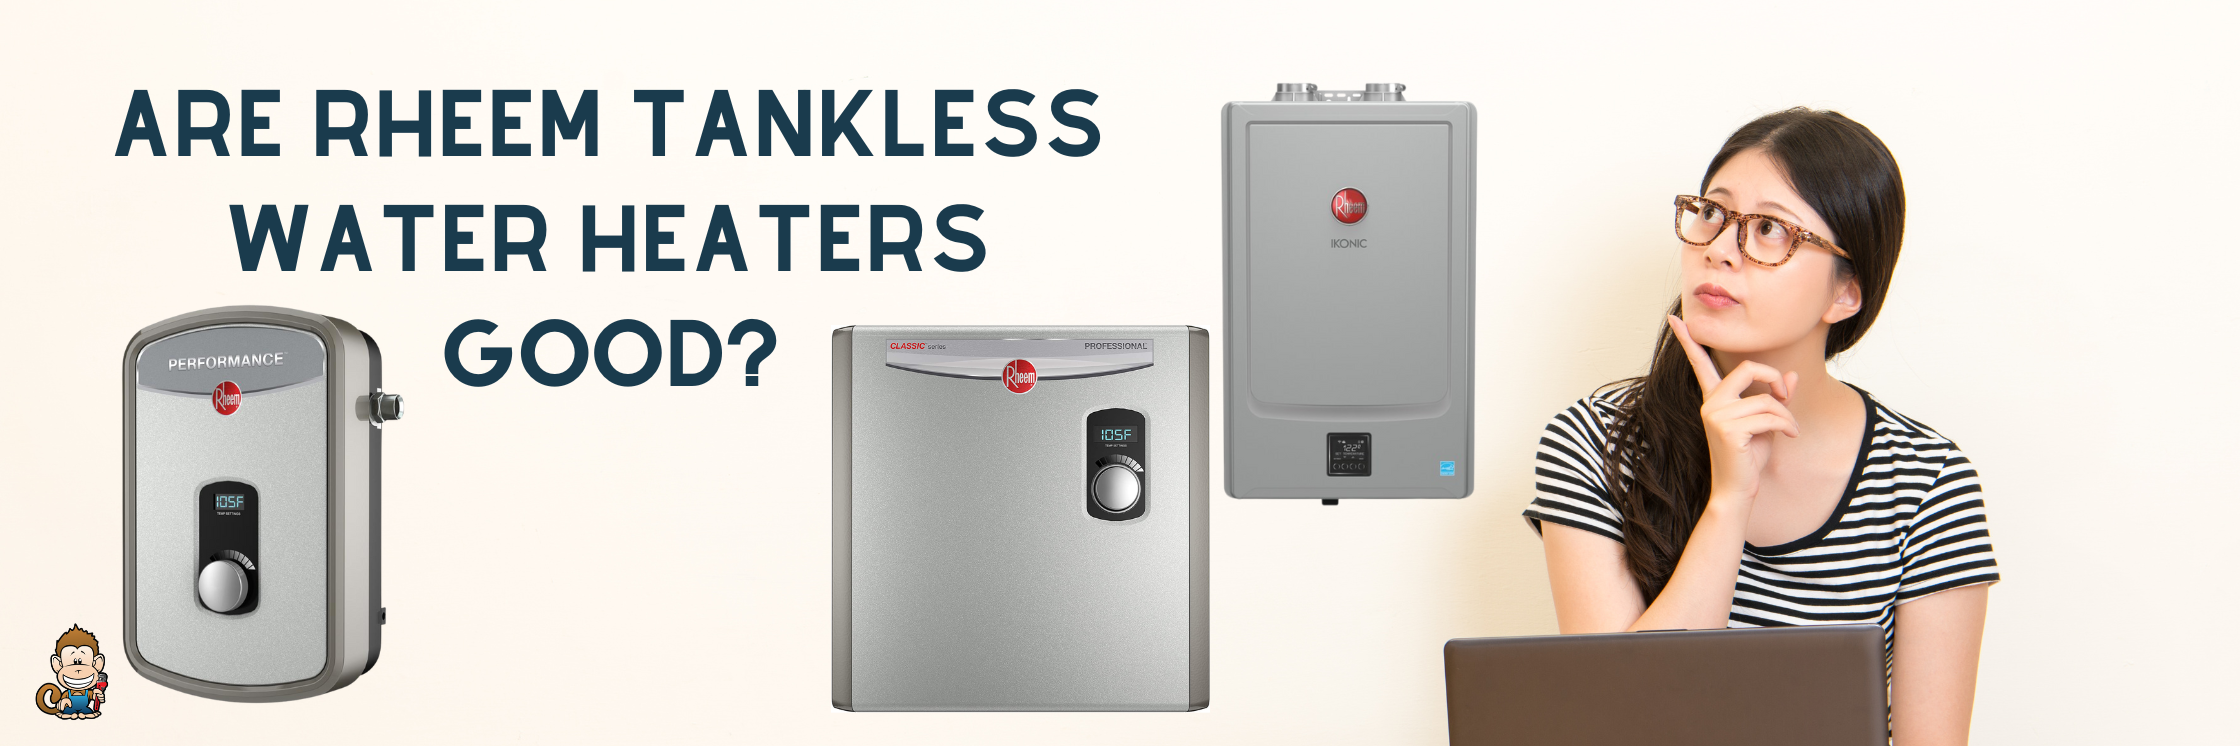 Are Rheem Tankless Water Heaters Good?